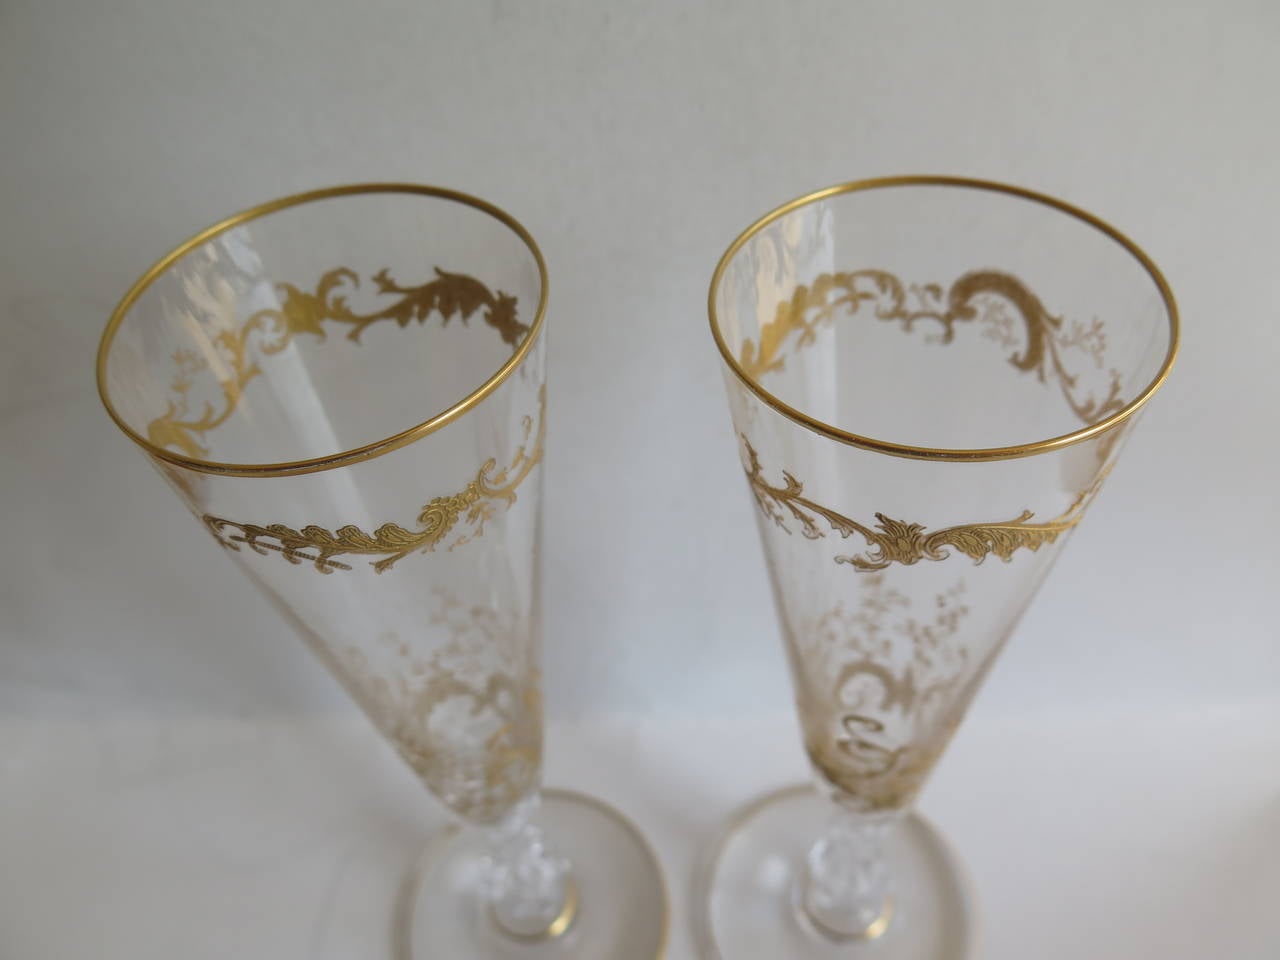 19th century wine glasses